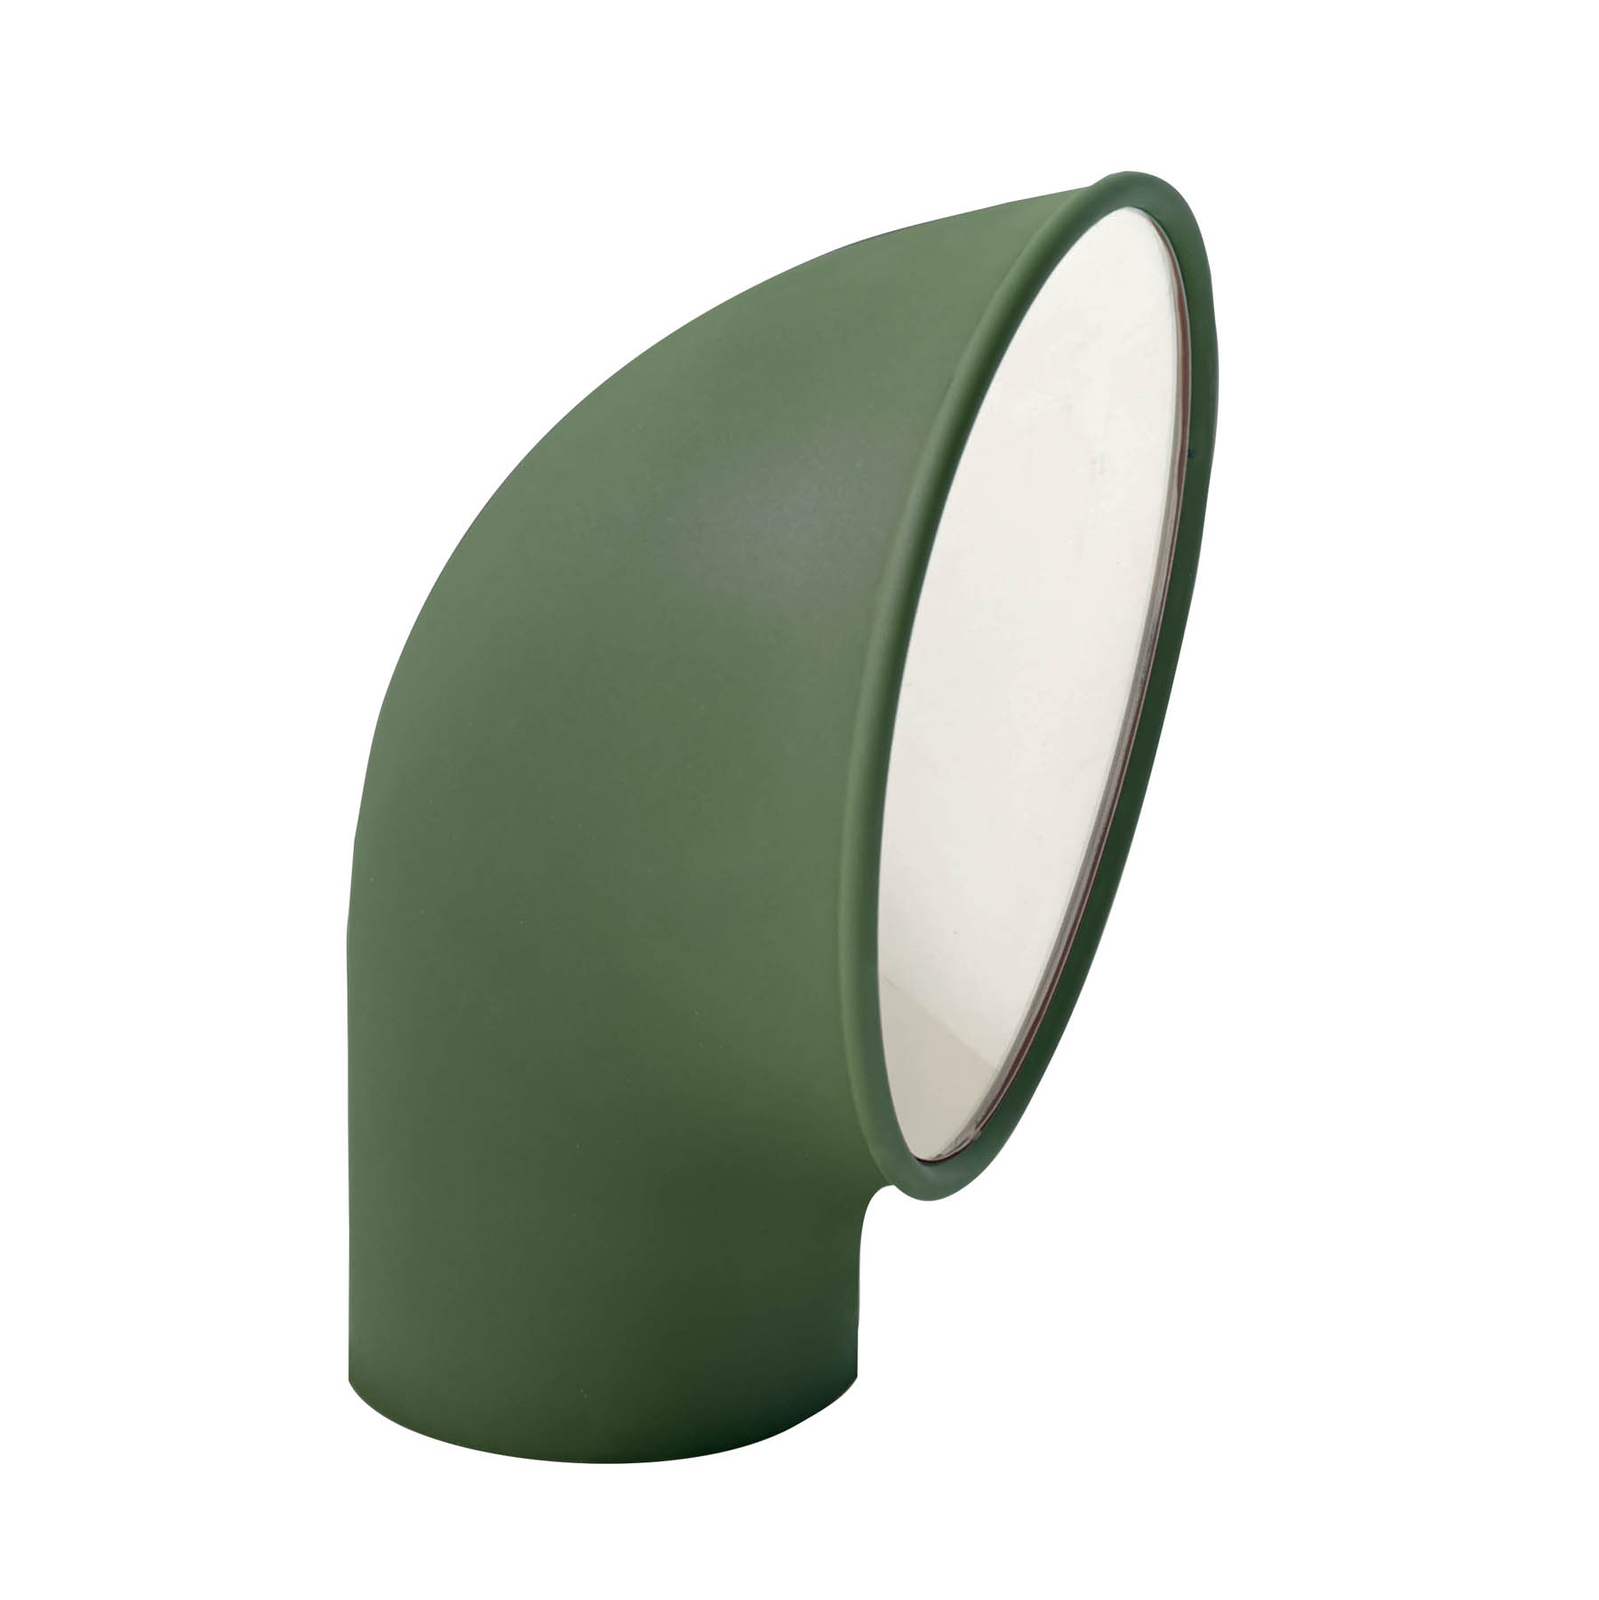 Artemide Piroscafo LED pillar light IP65, green